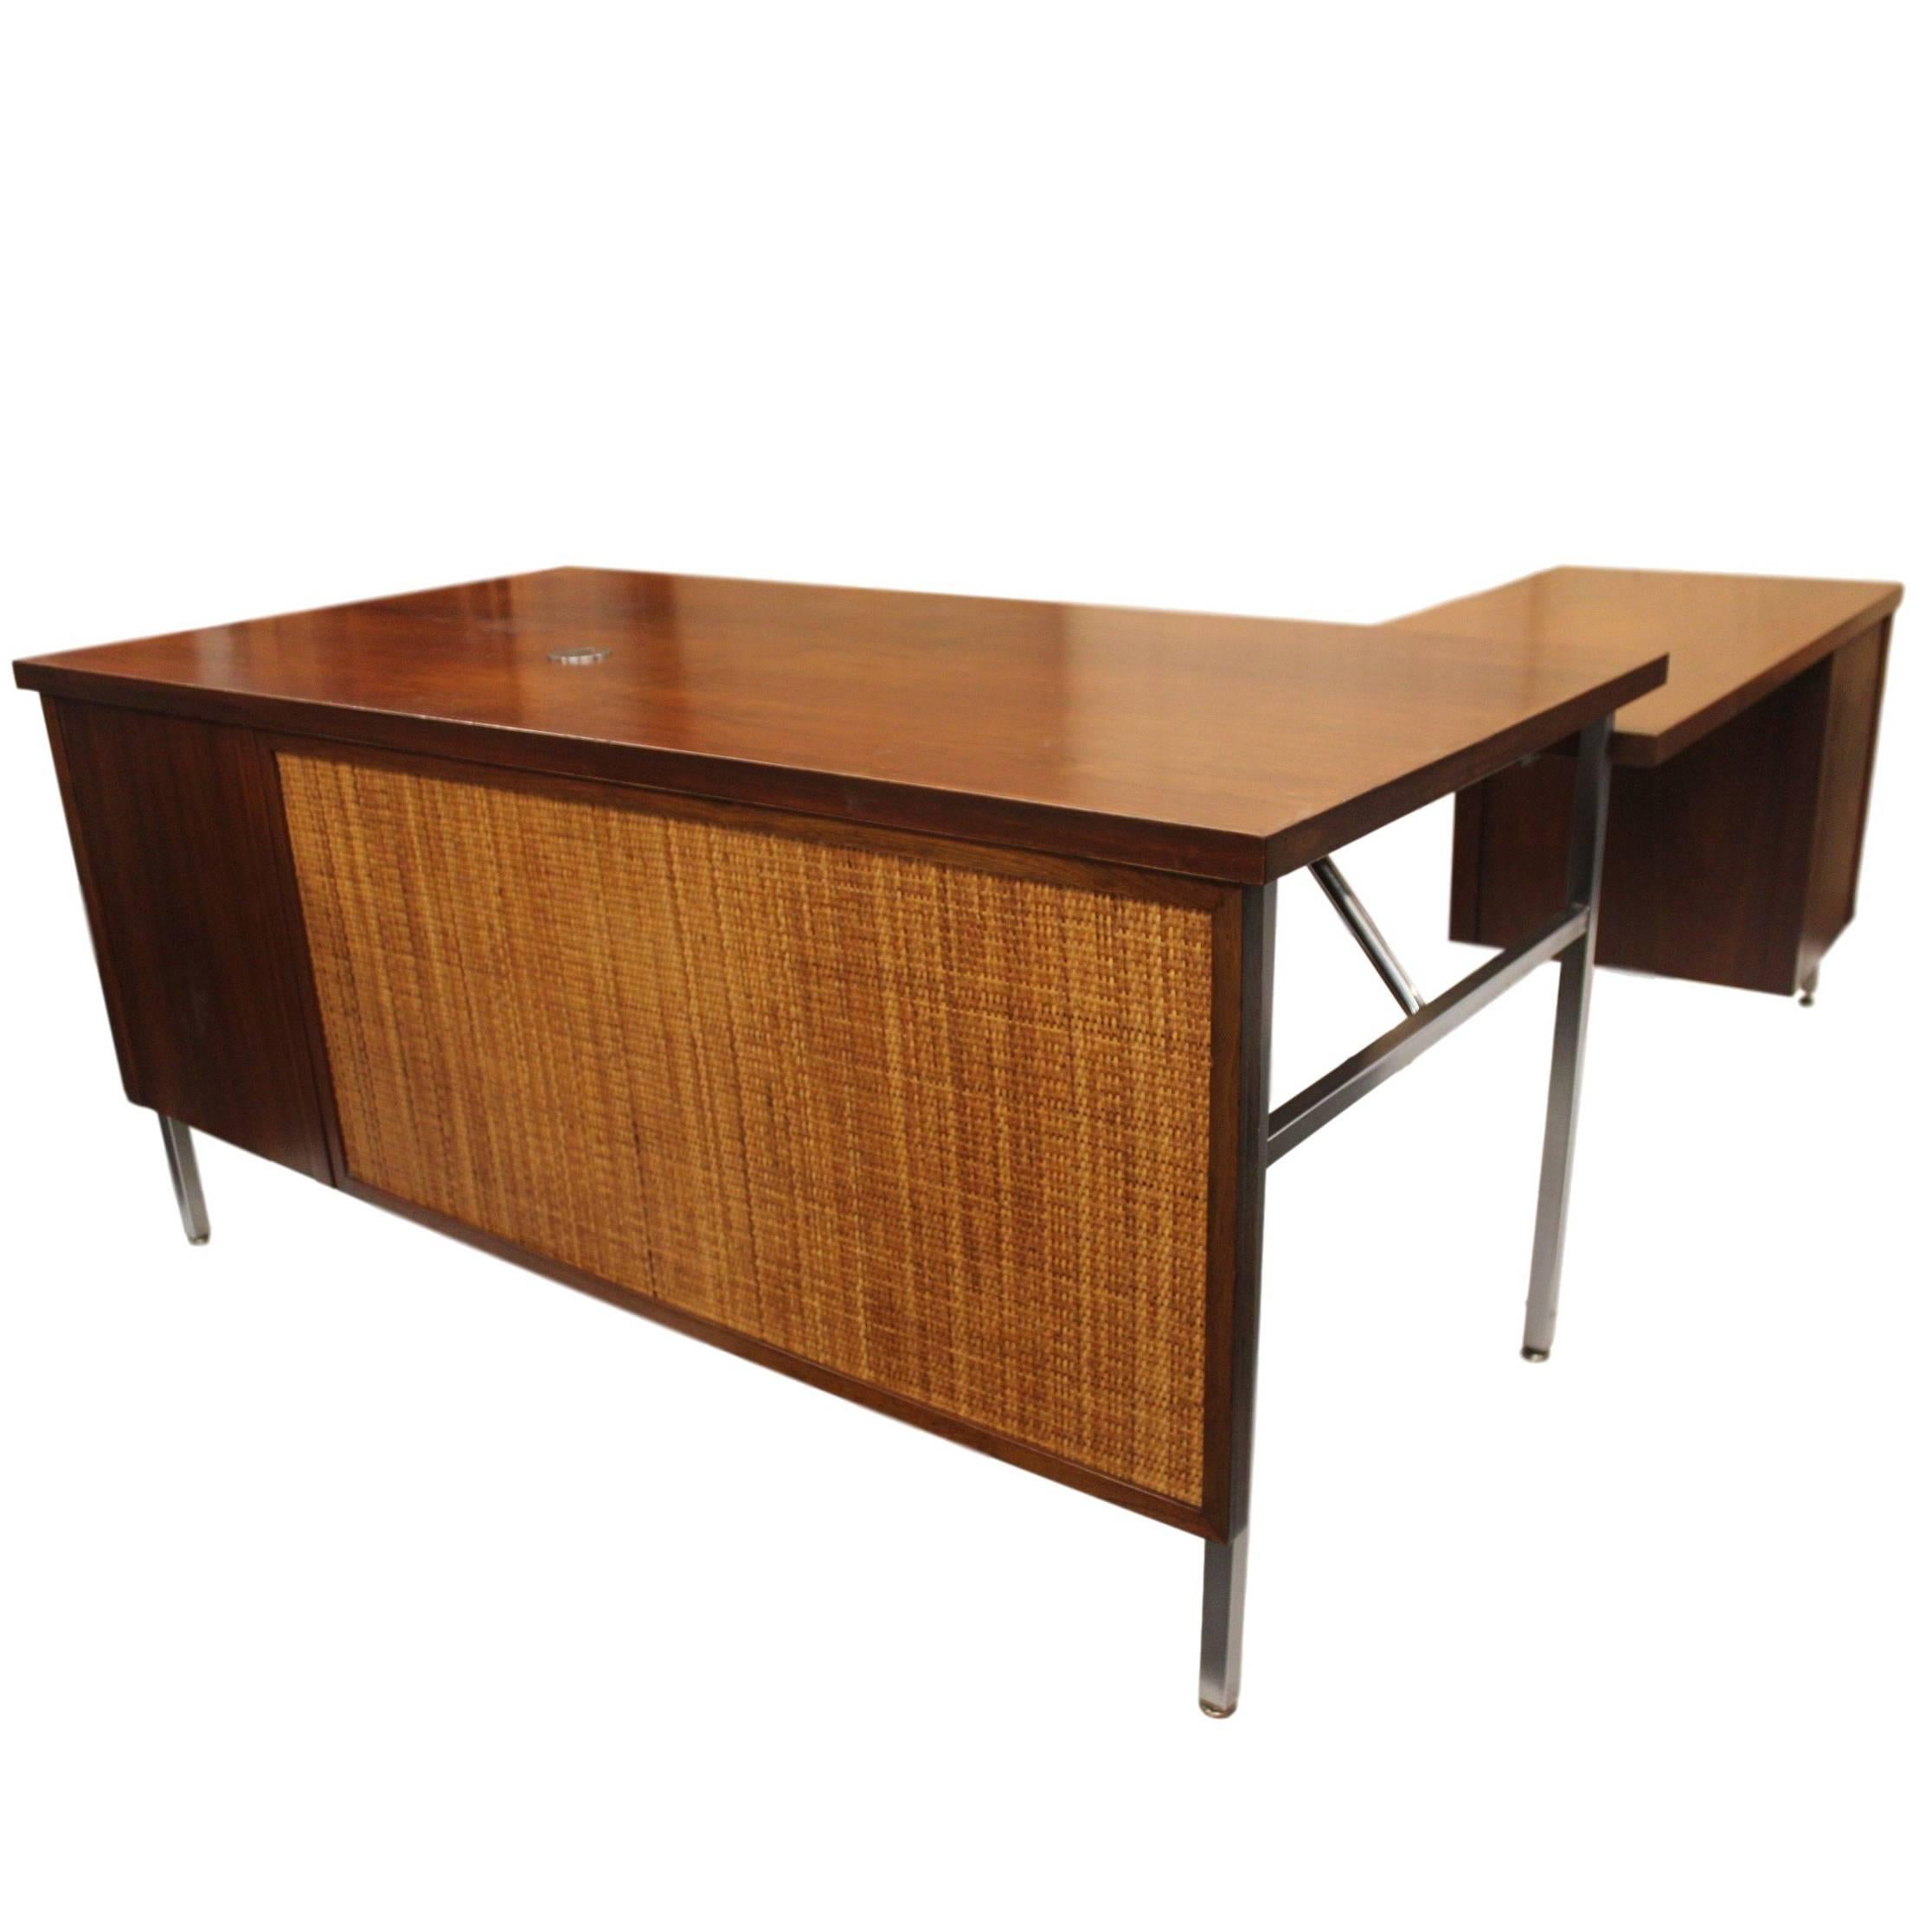 Vintage 1960s Mid-Century Modern Walnut & Chrome Executive Desk by Steelcase